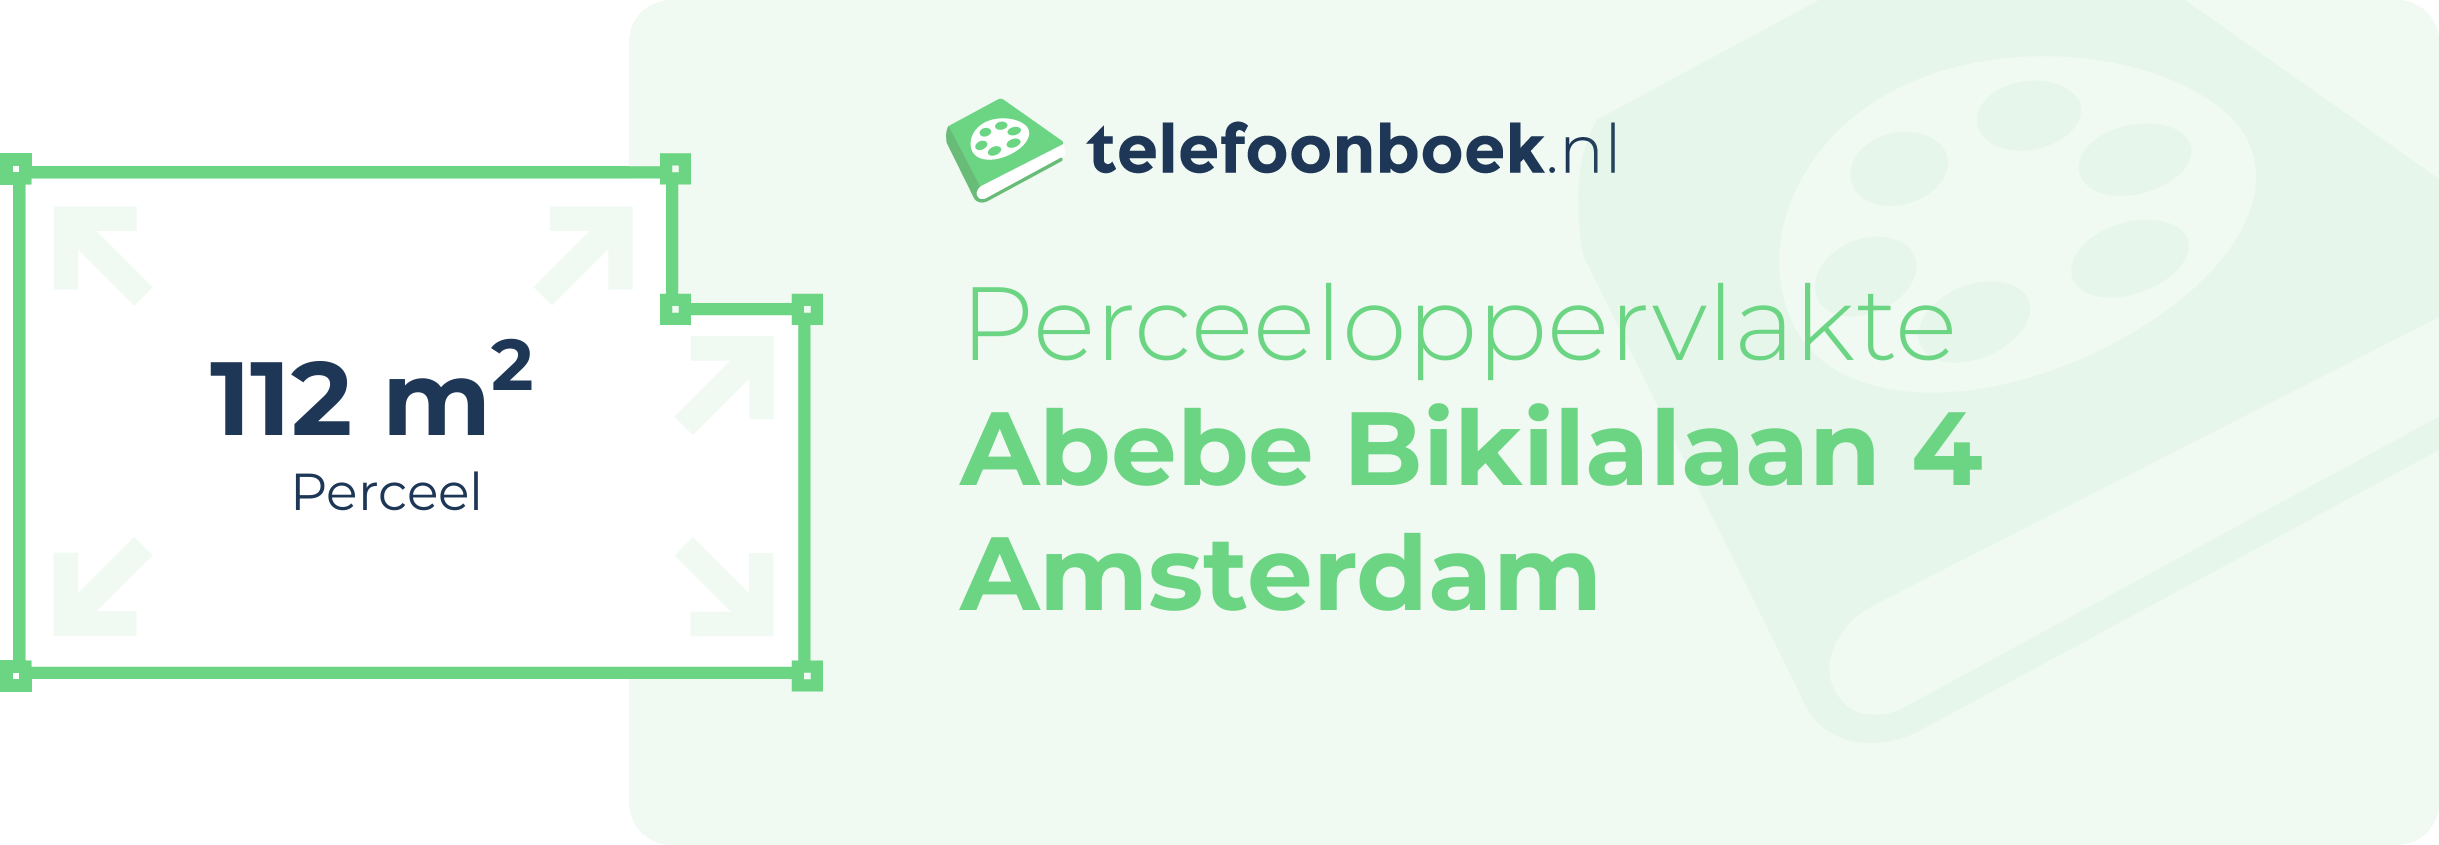 Perceeloppervlakte Abebe Bikilalaan 4 Amsterdam